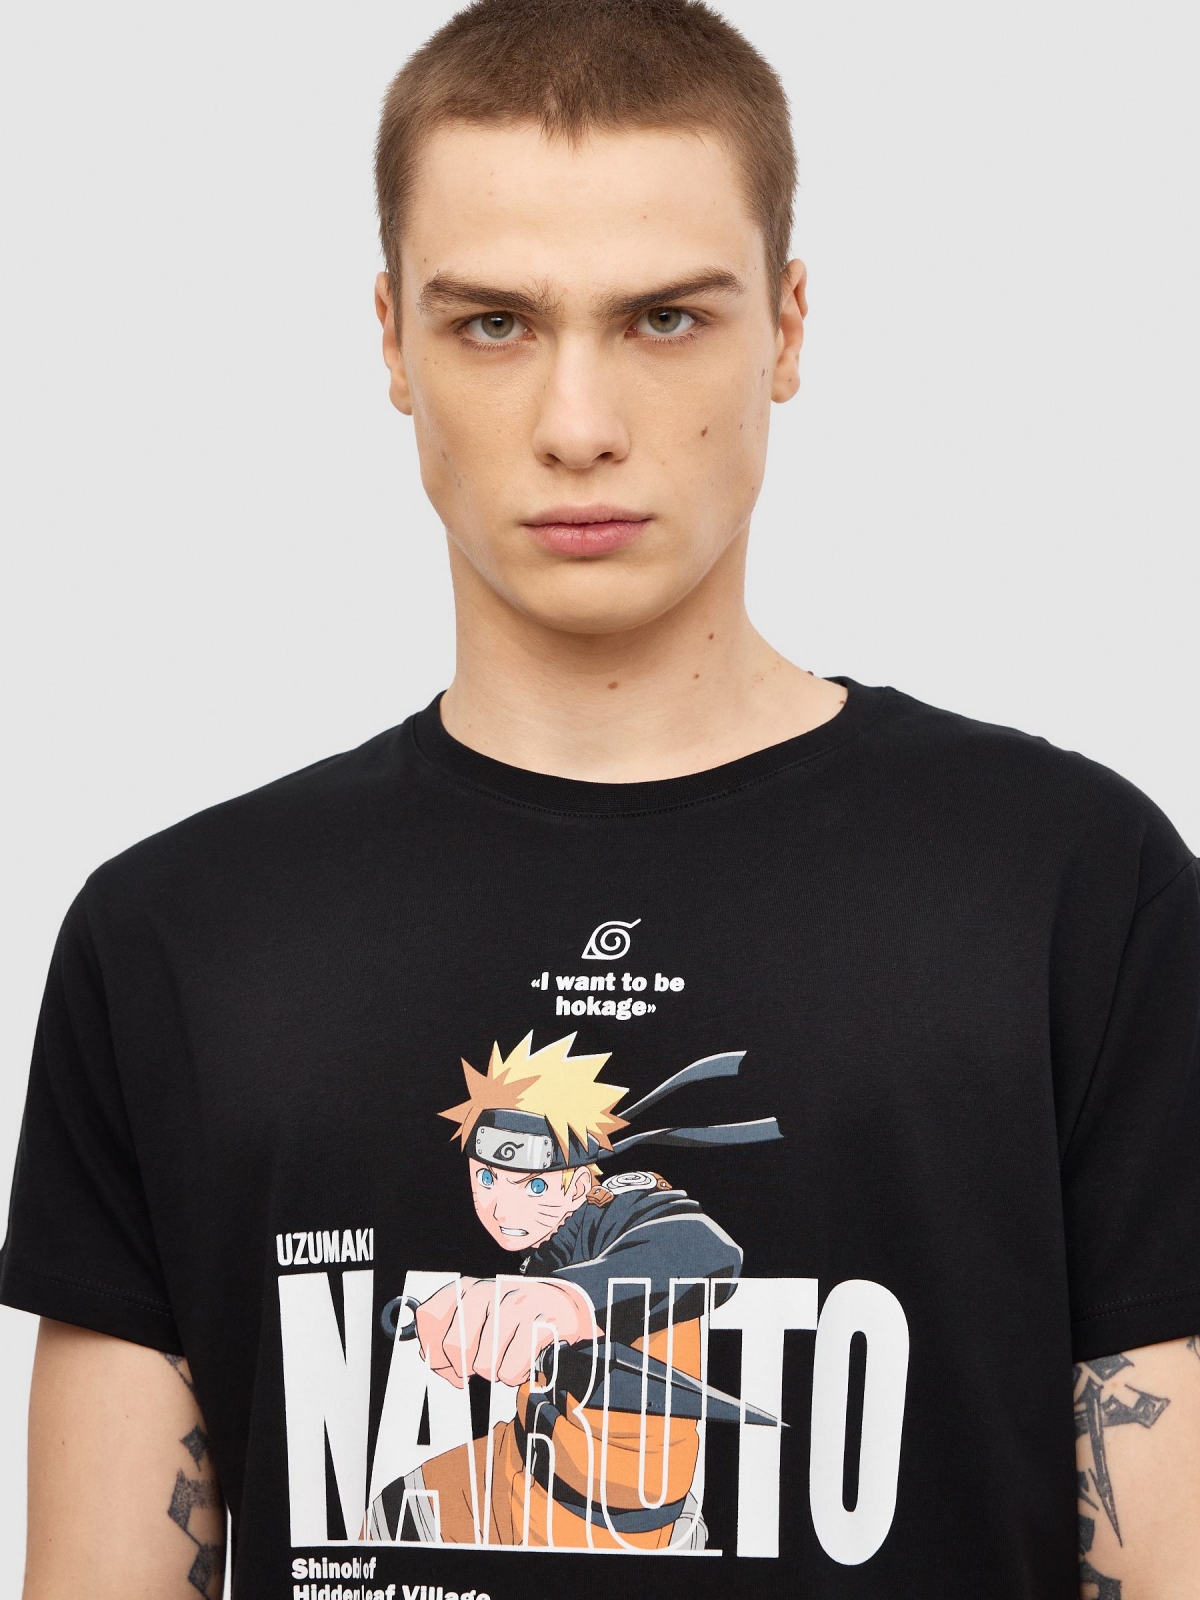 Naruto text T-shirt black detail view